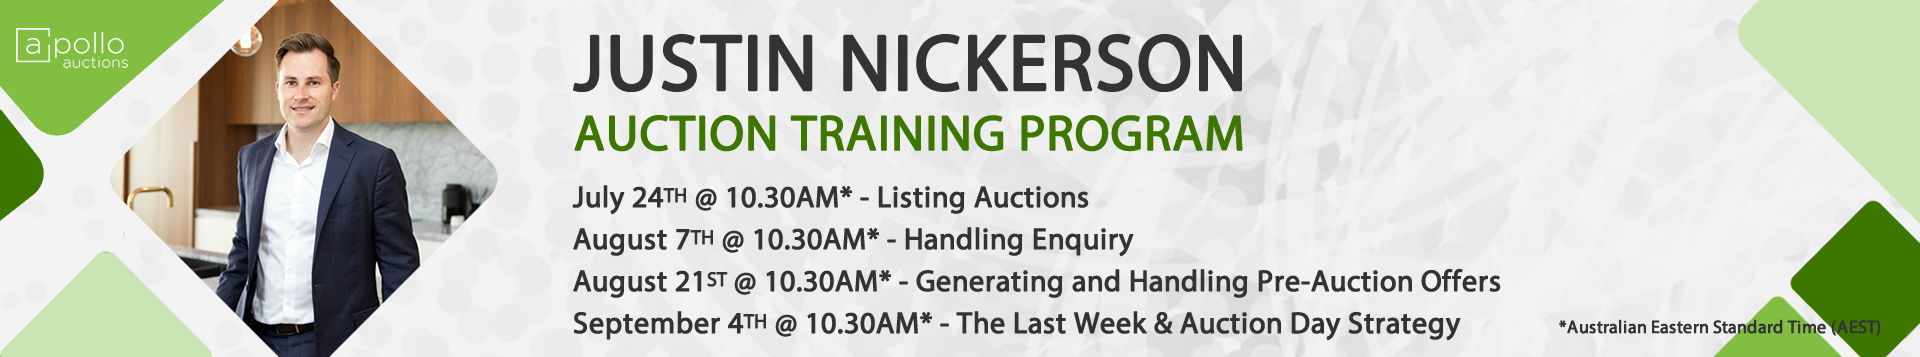 Justin Nickerson Auction Training Program